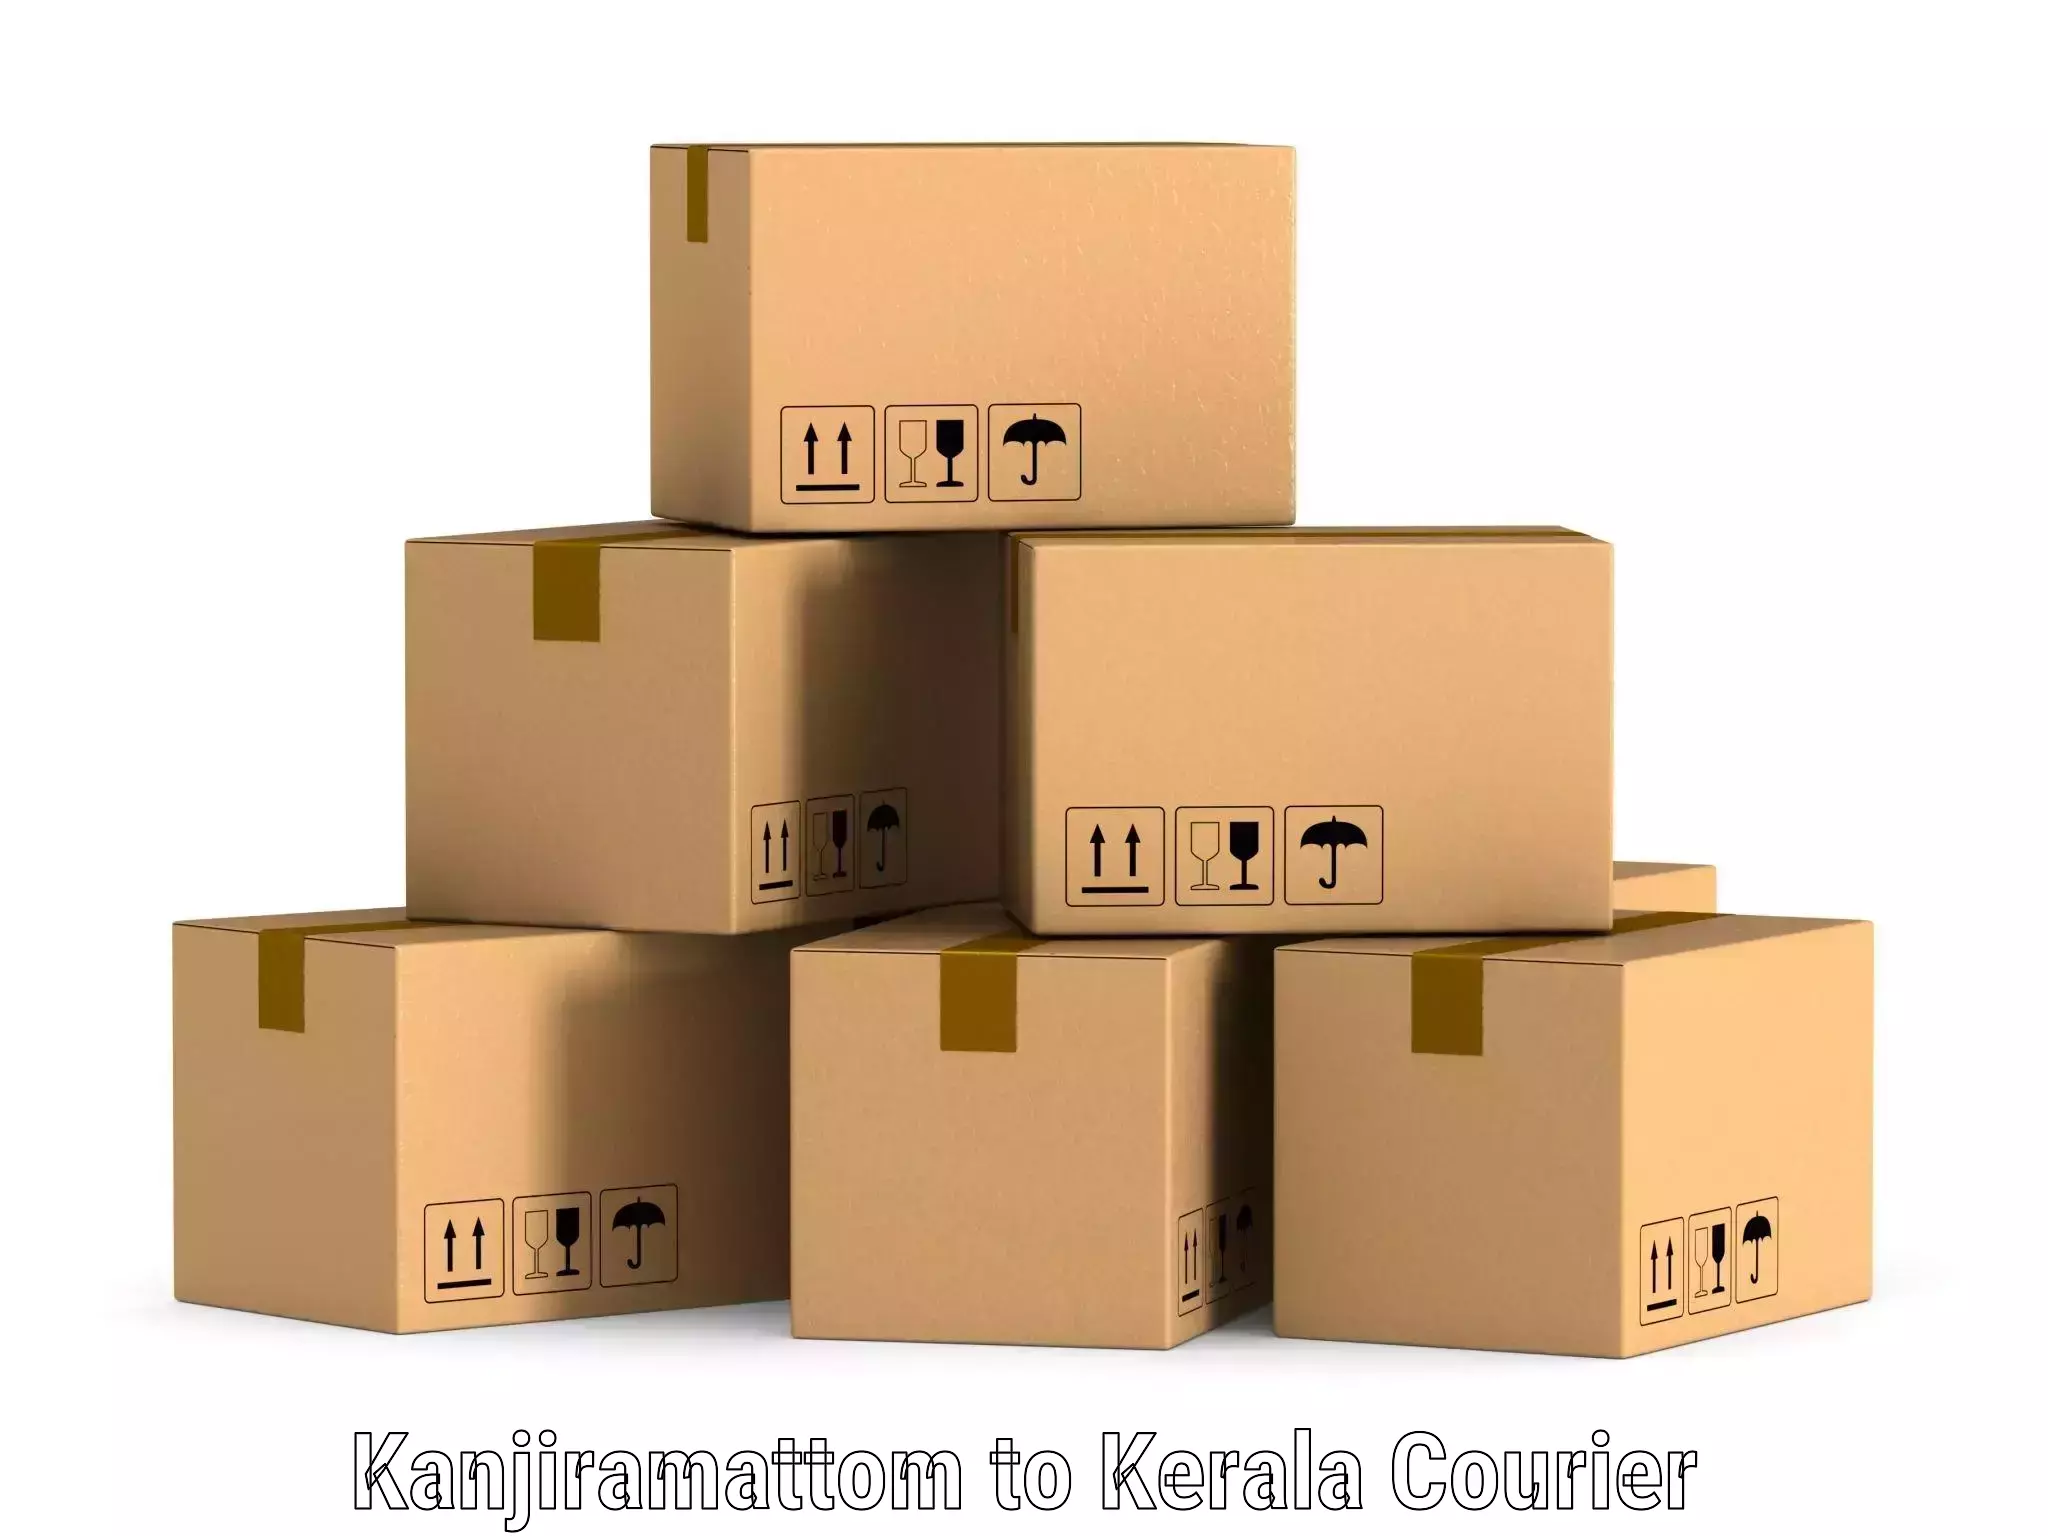 High-priority parcel service in Kanjiramattom to Kakkayam